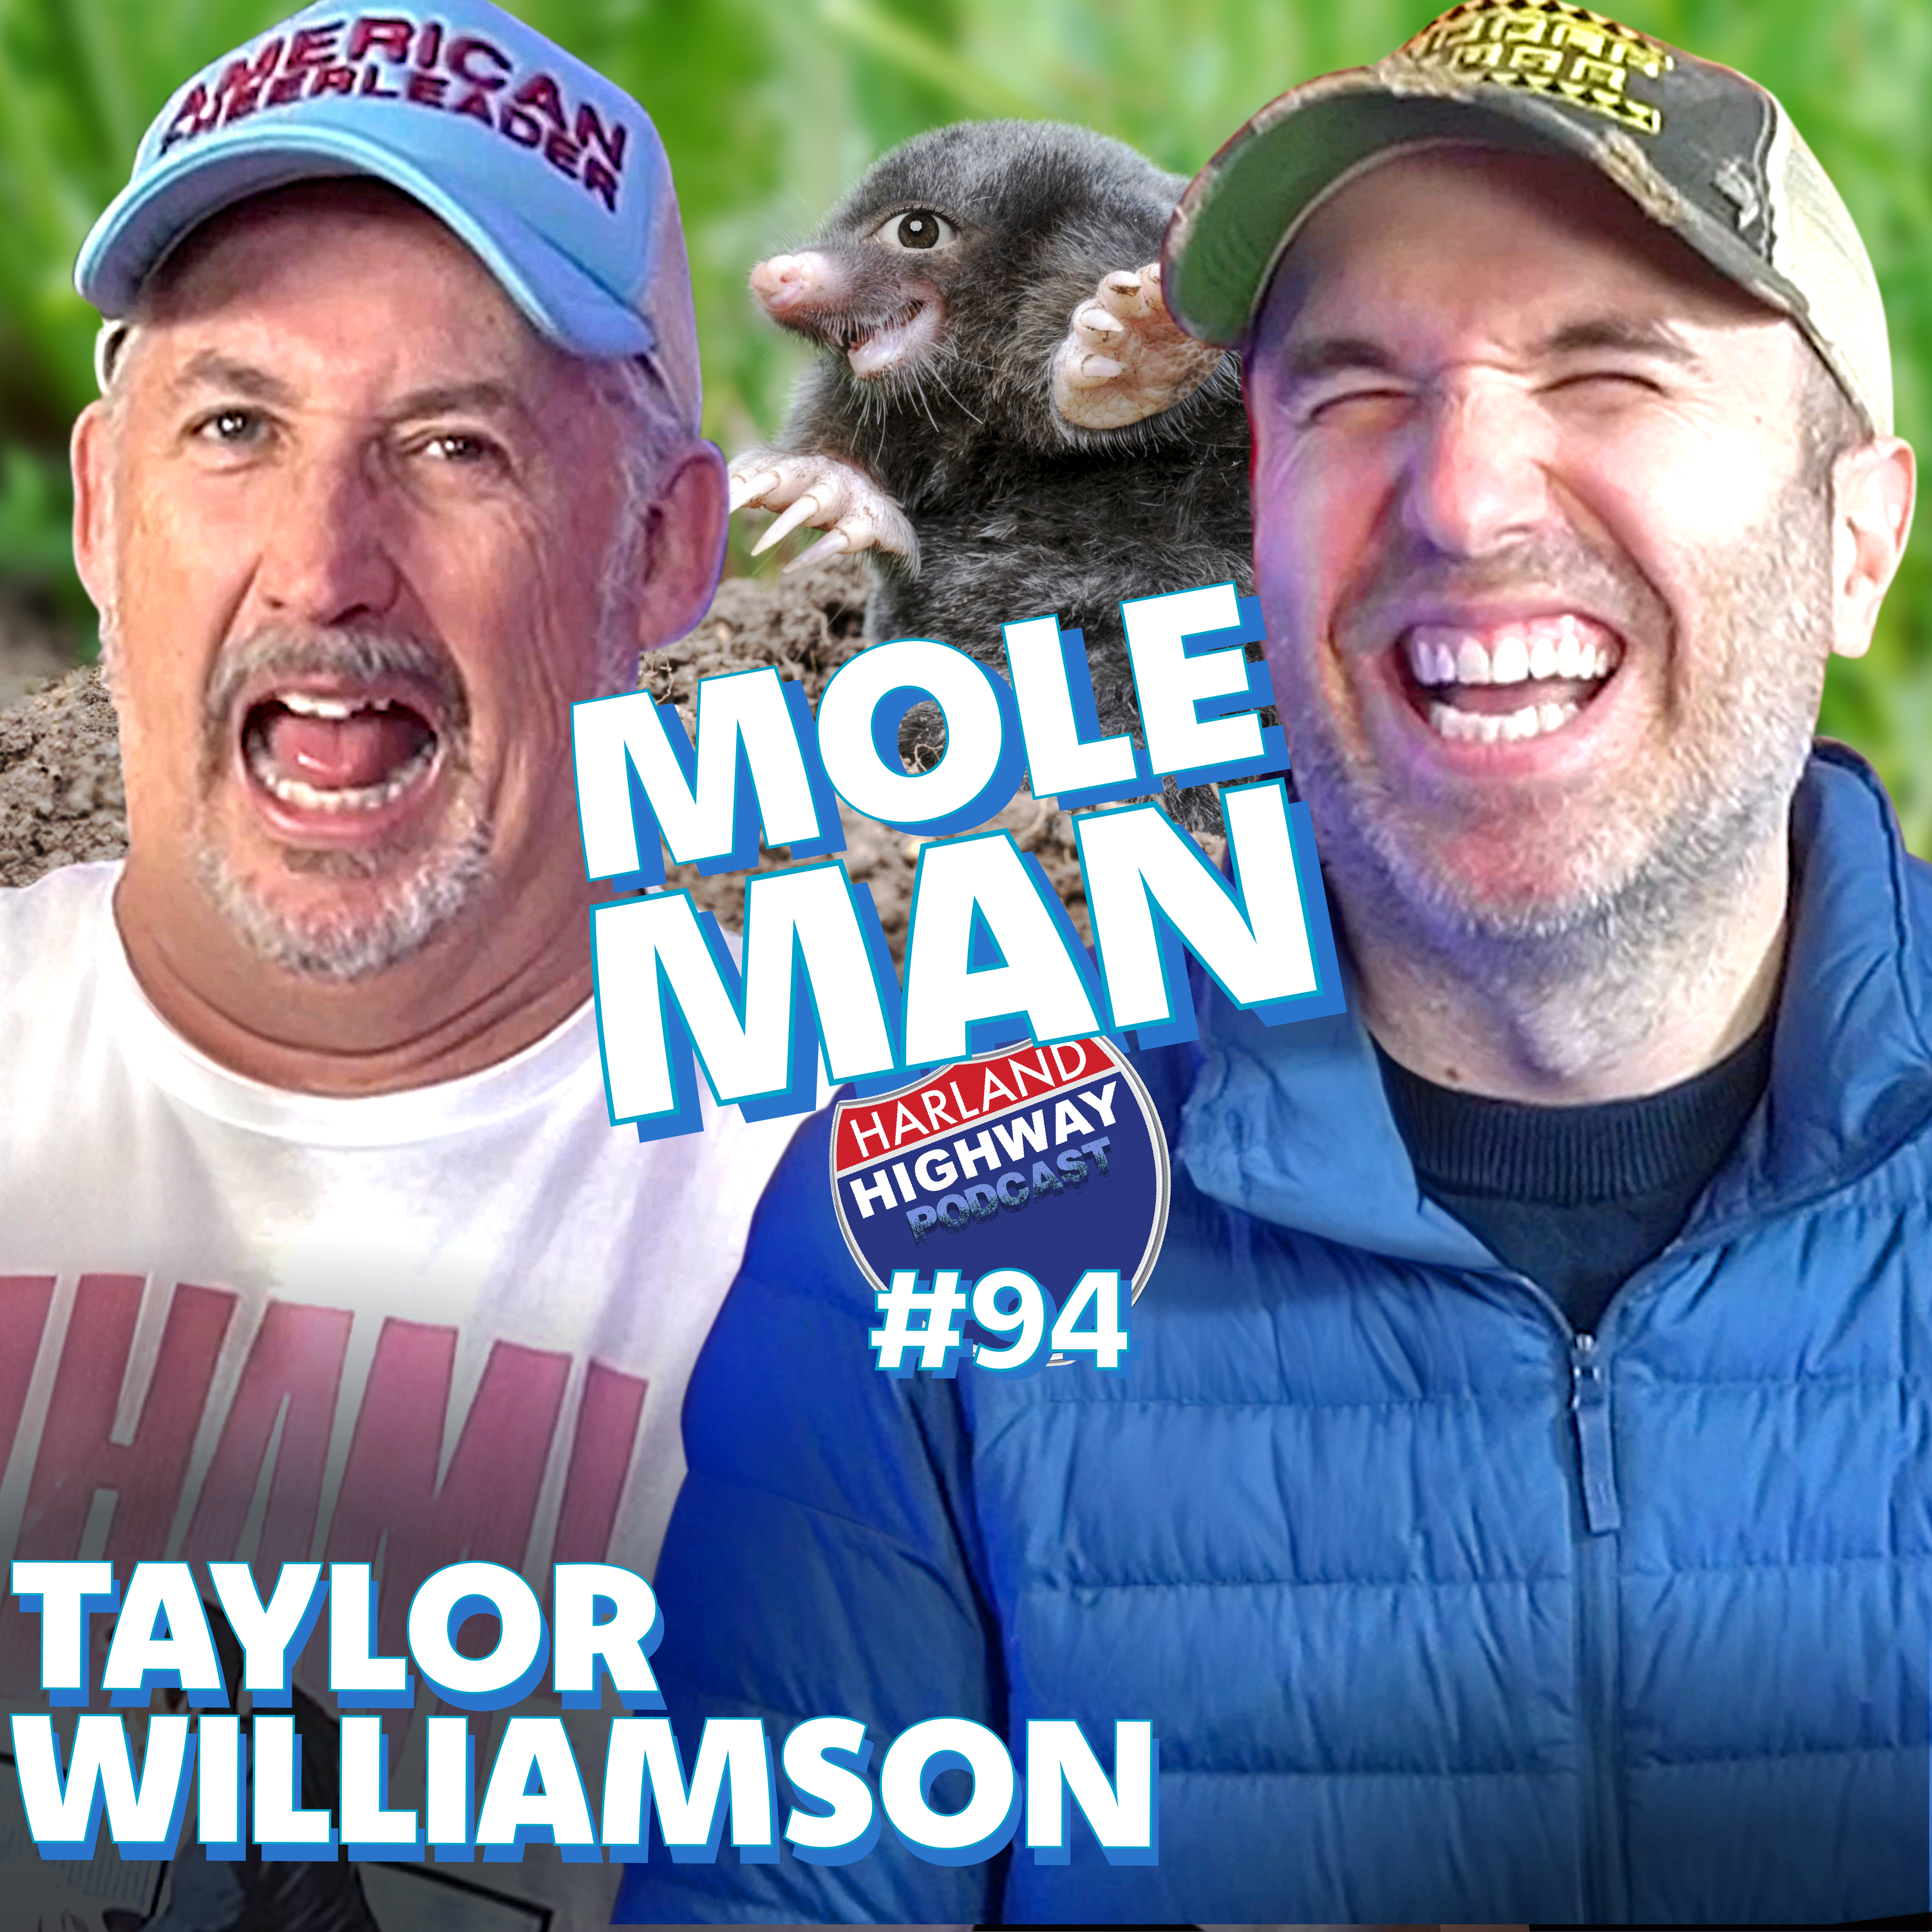 TAYLOR WILLIAMSON-  Comedian and sleep paralysis survivor!